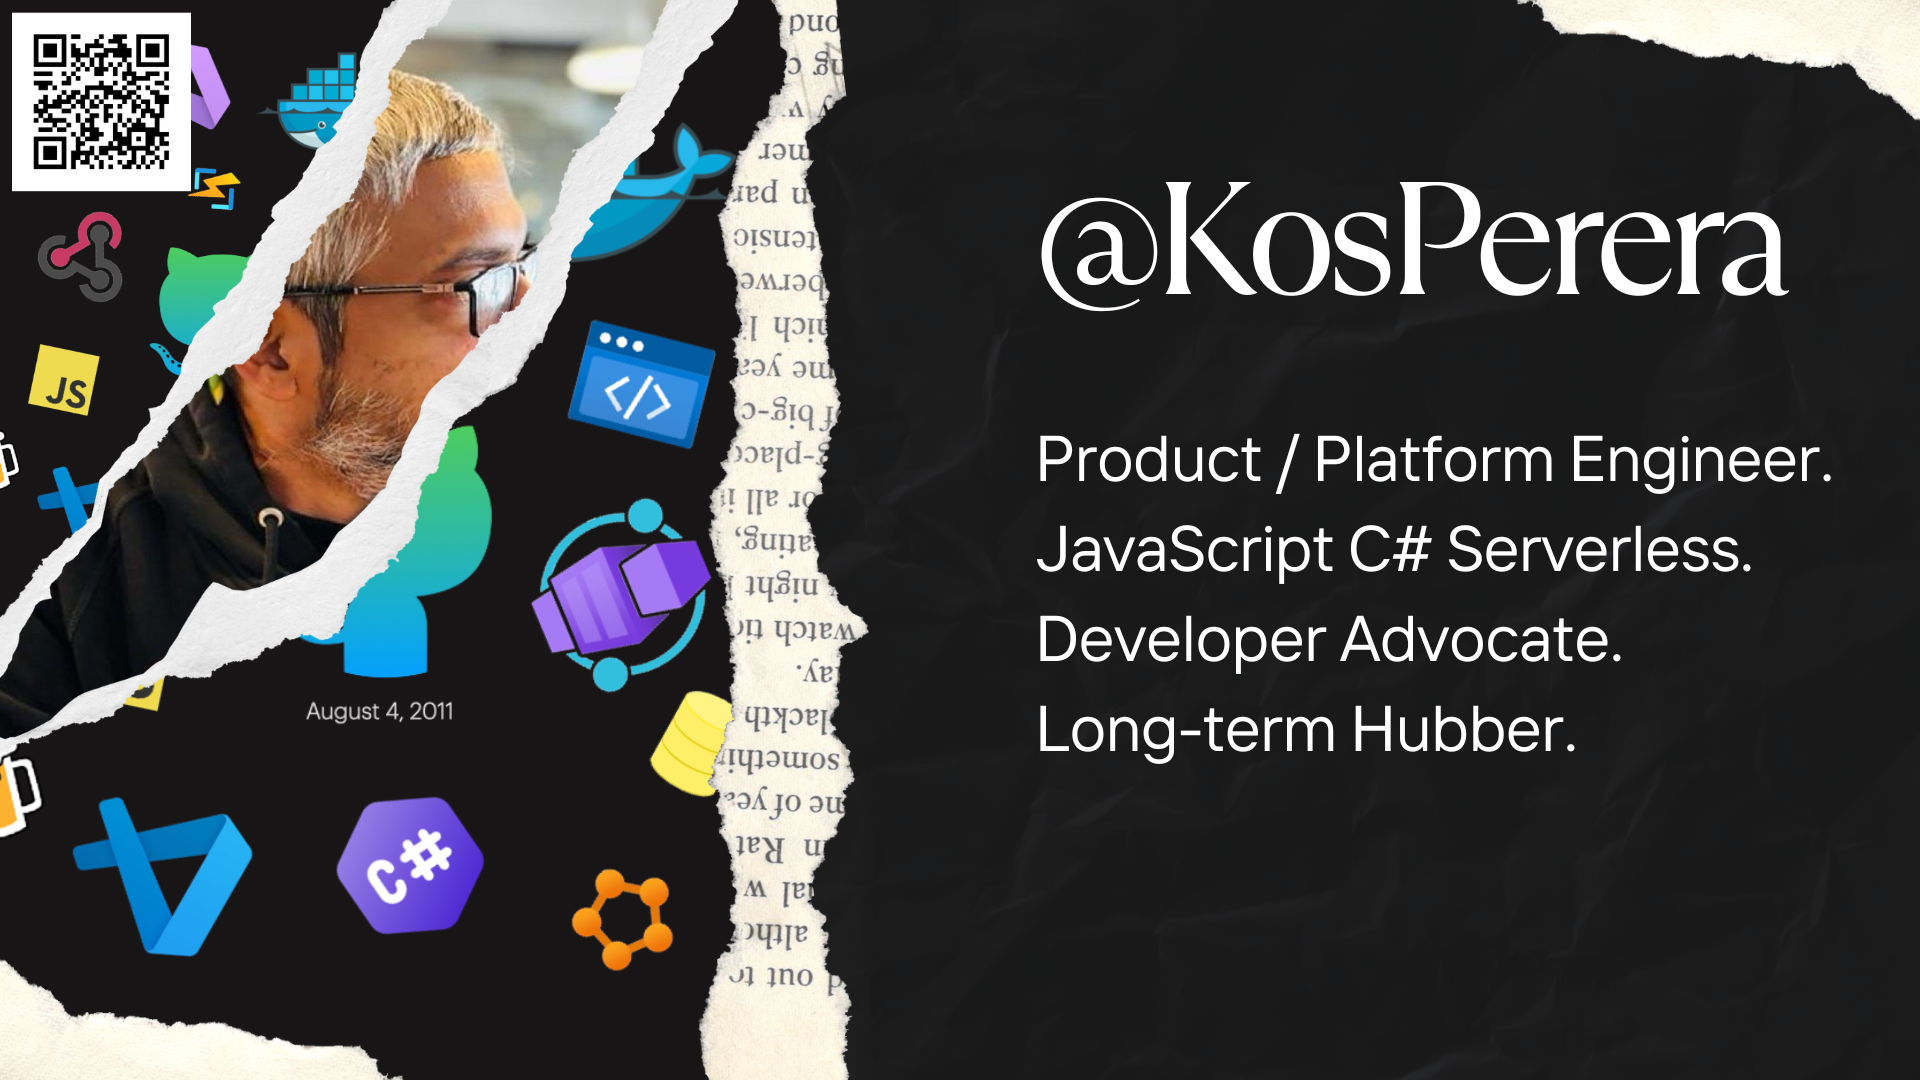 Product/Platform Engineer. JavaScript C# Serverless. Developer Advocate. Long-term Hubber.